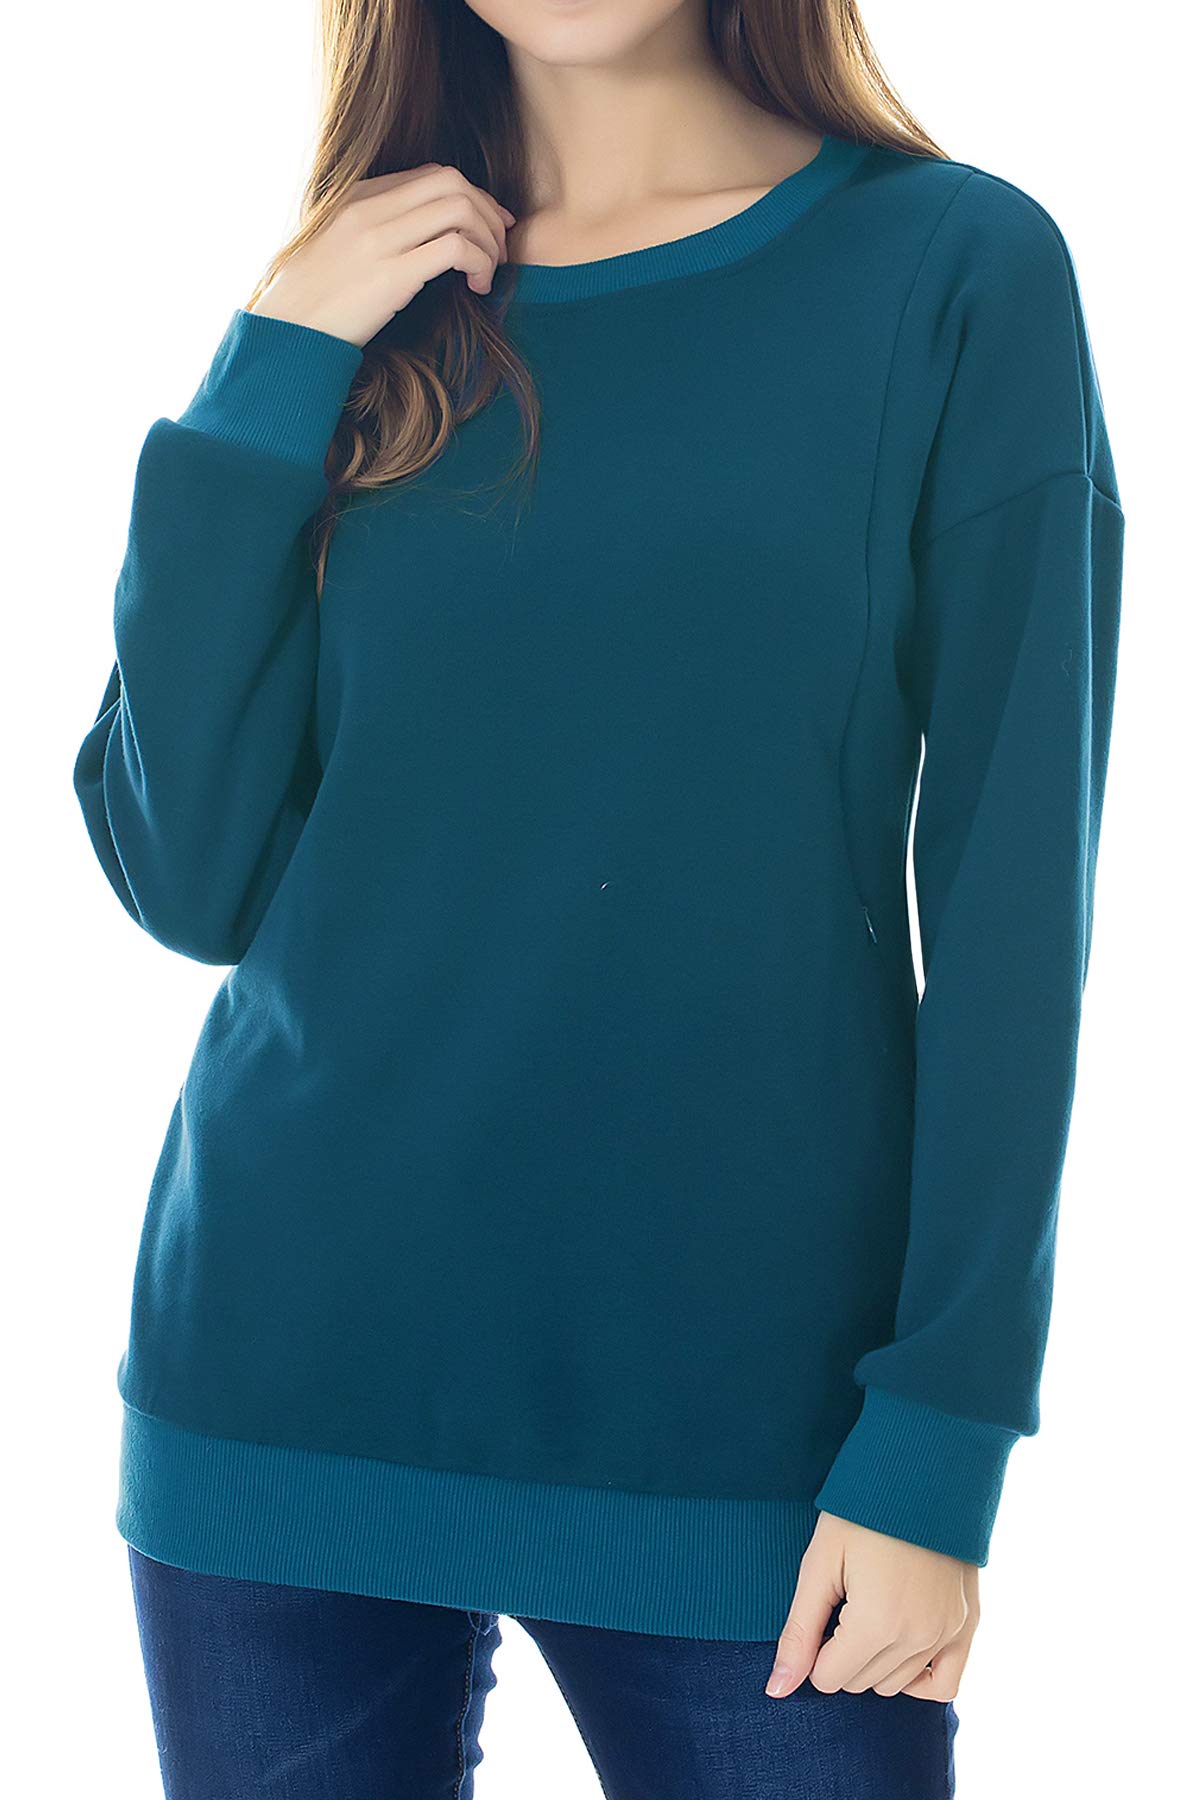 Smallshow Pflege Sweatshirt Langarm T-Shirt Bluse Stillen Pullover Tops Stillshirt Teal M